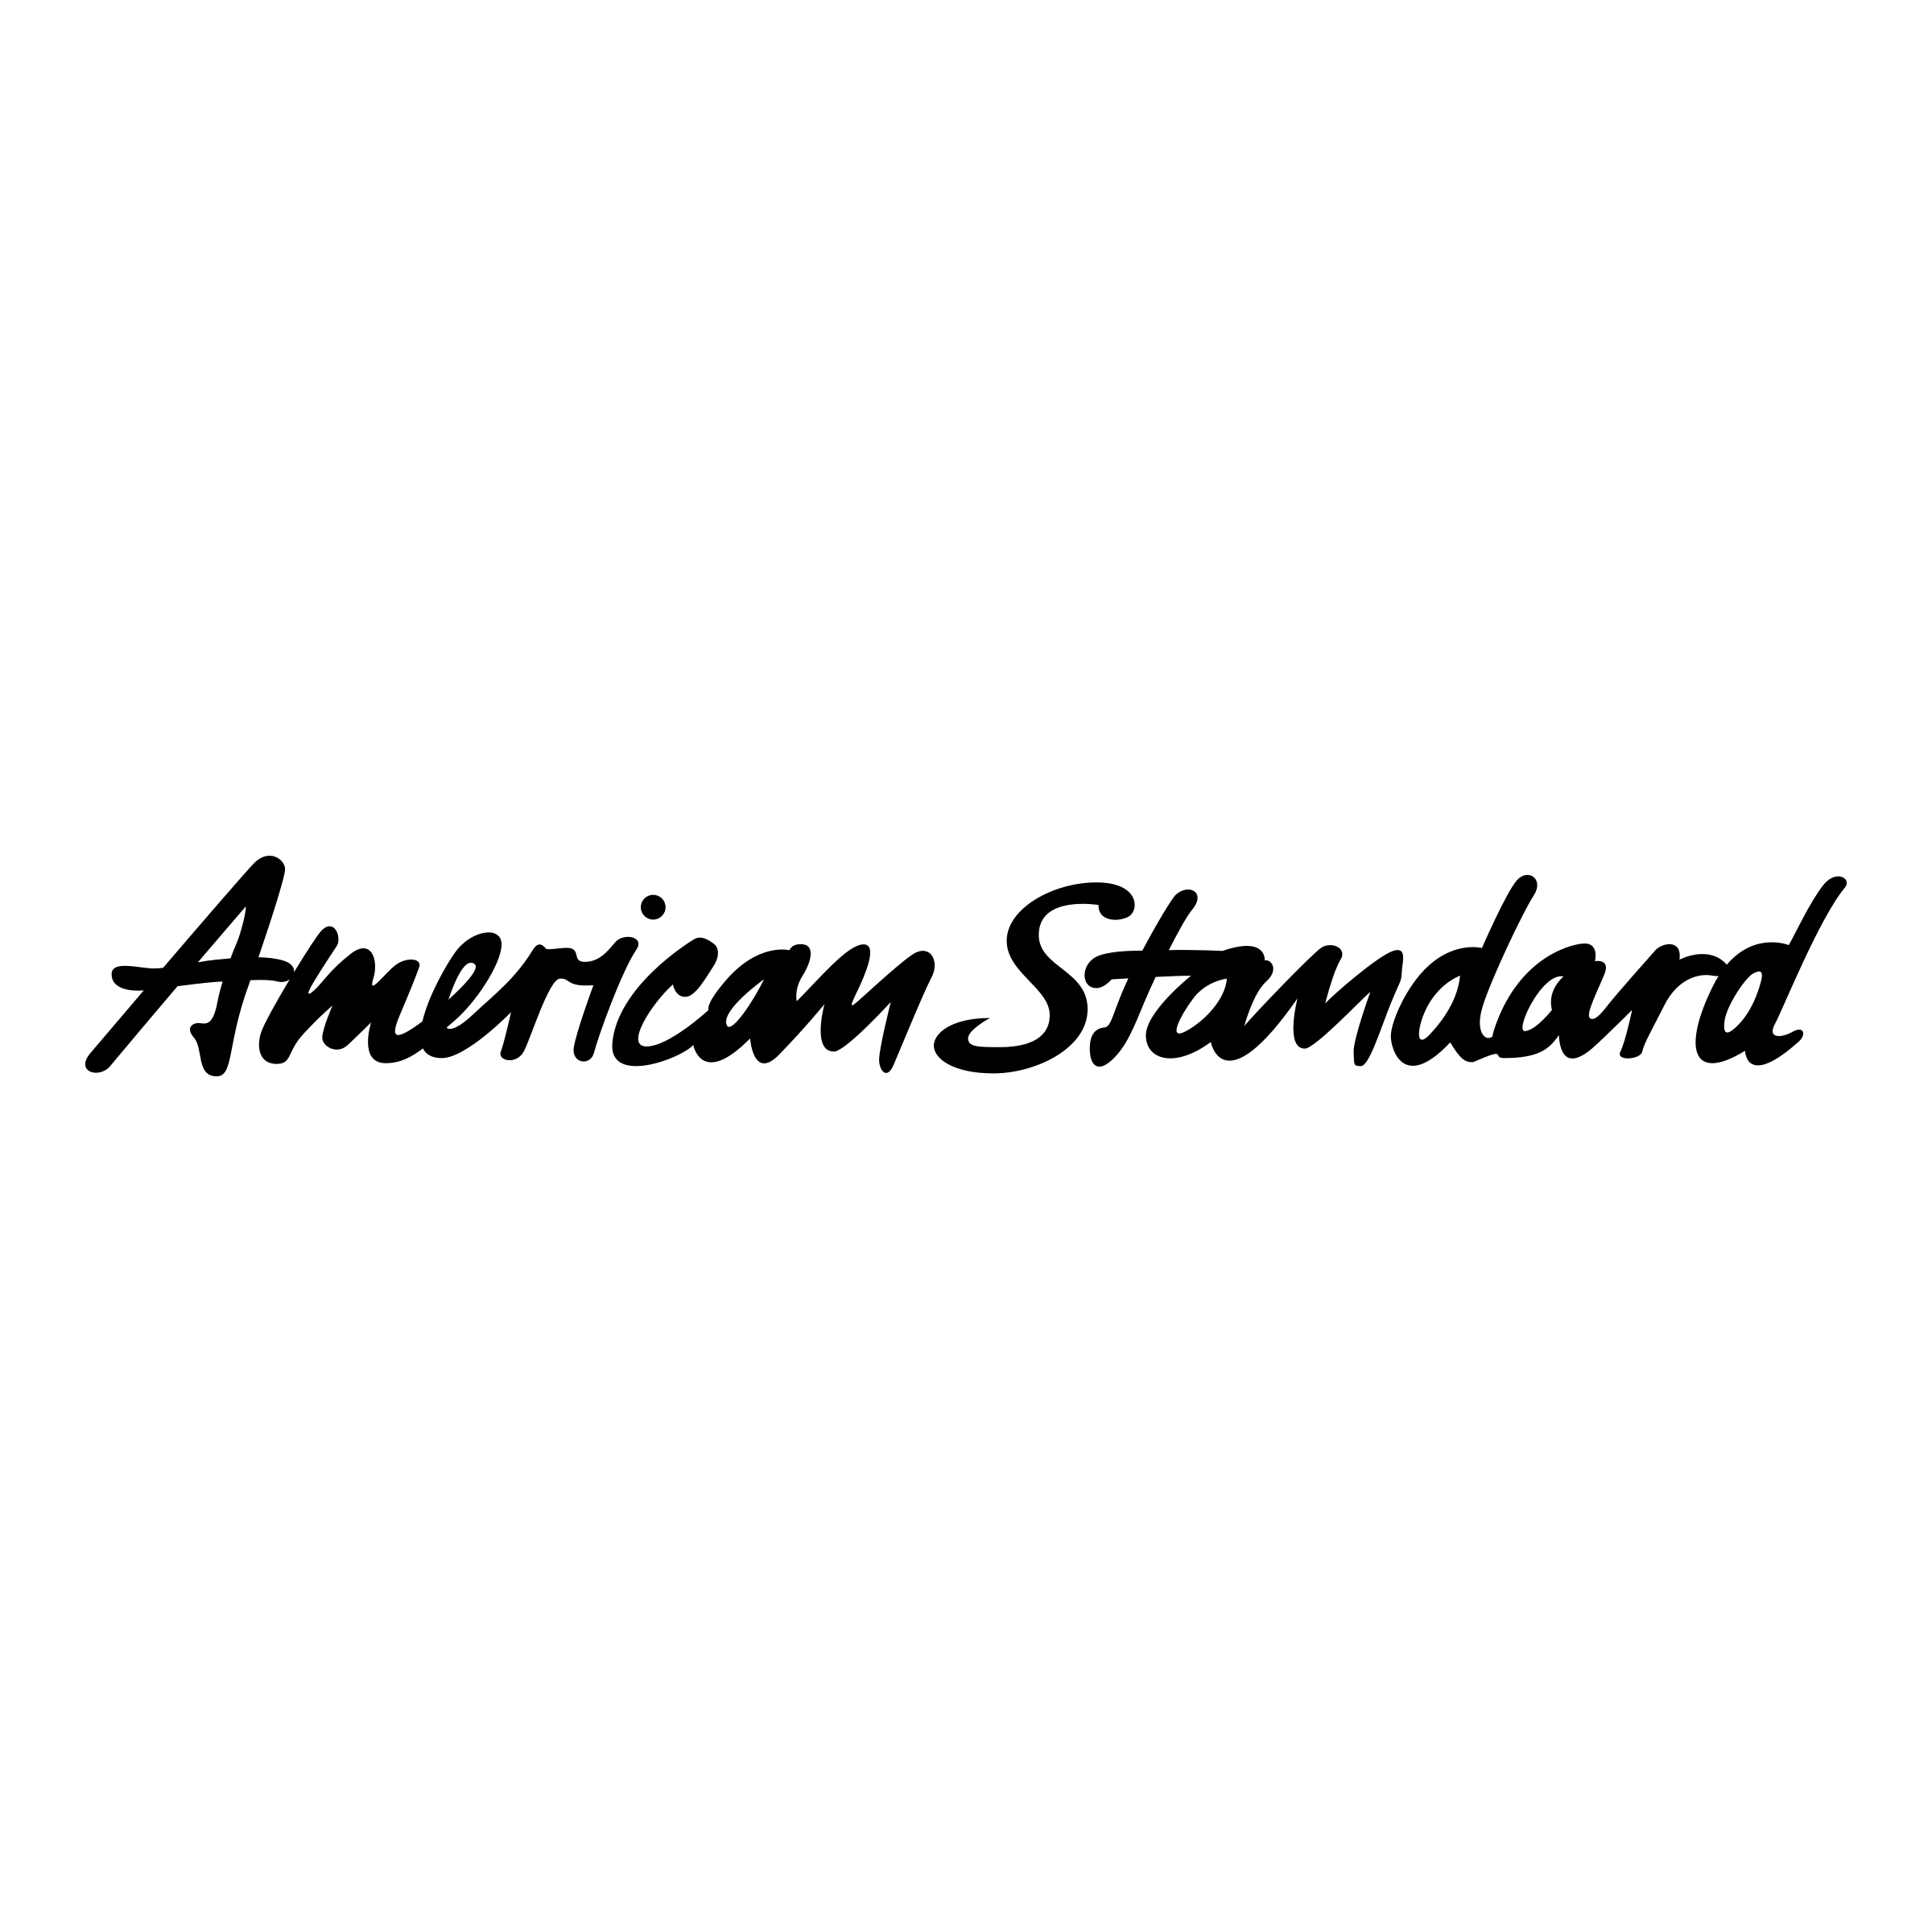 American Standard Logo - American Standard Logo PNG Transparent & SVG Vector